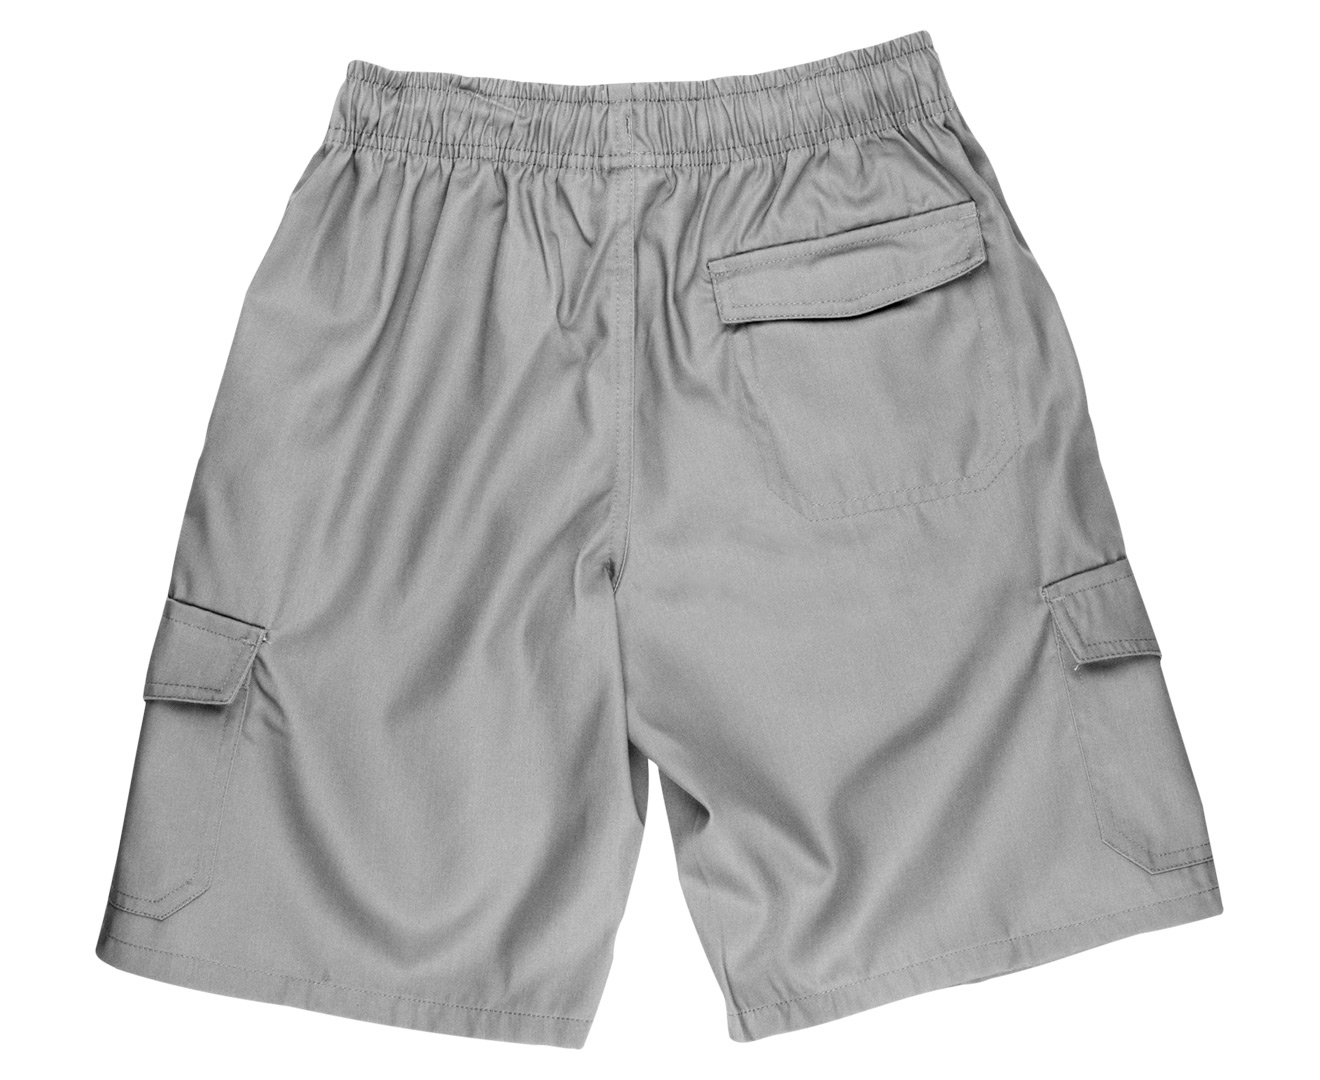 Stubbies Kids' Cargo Shorts - Grey | Catch.com.au